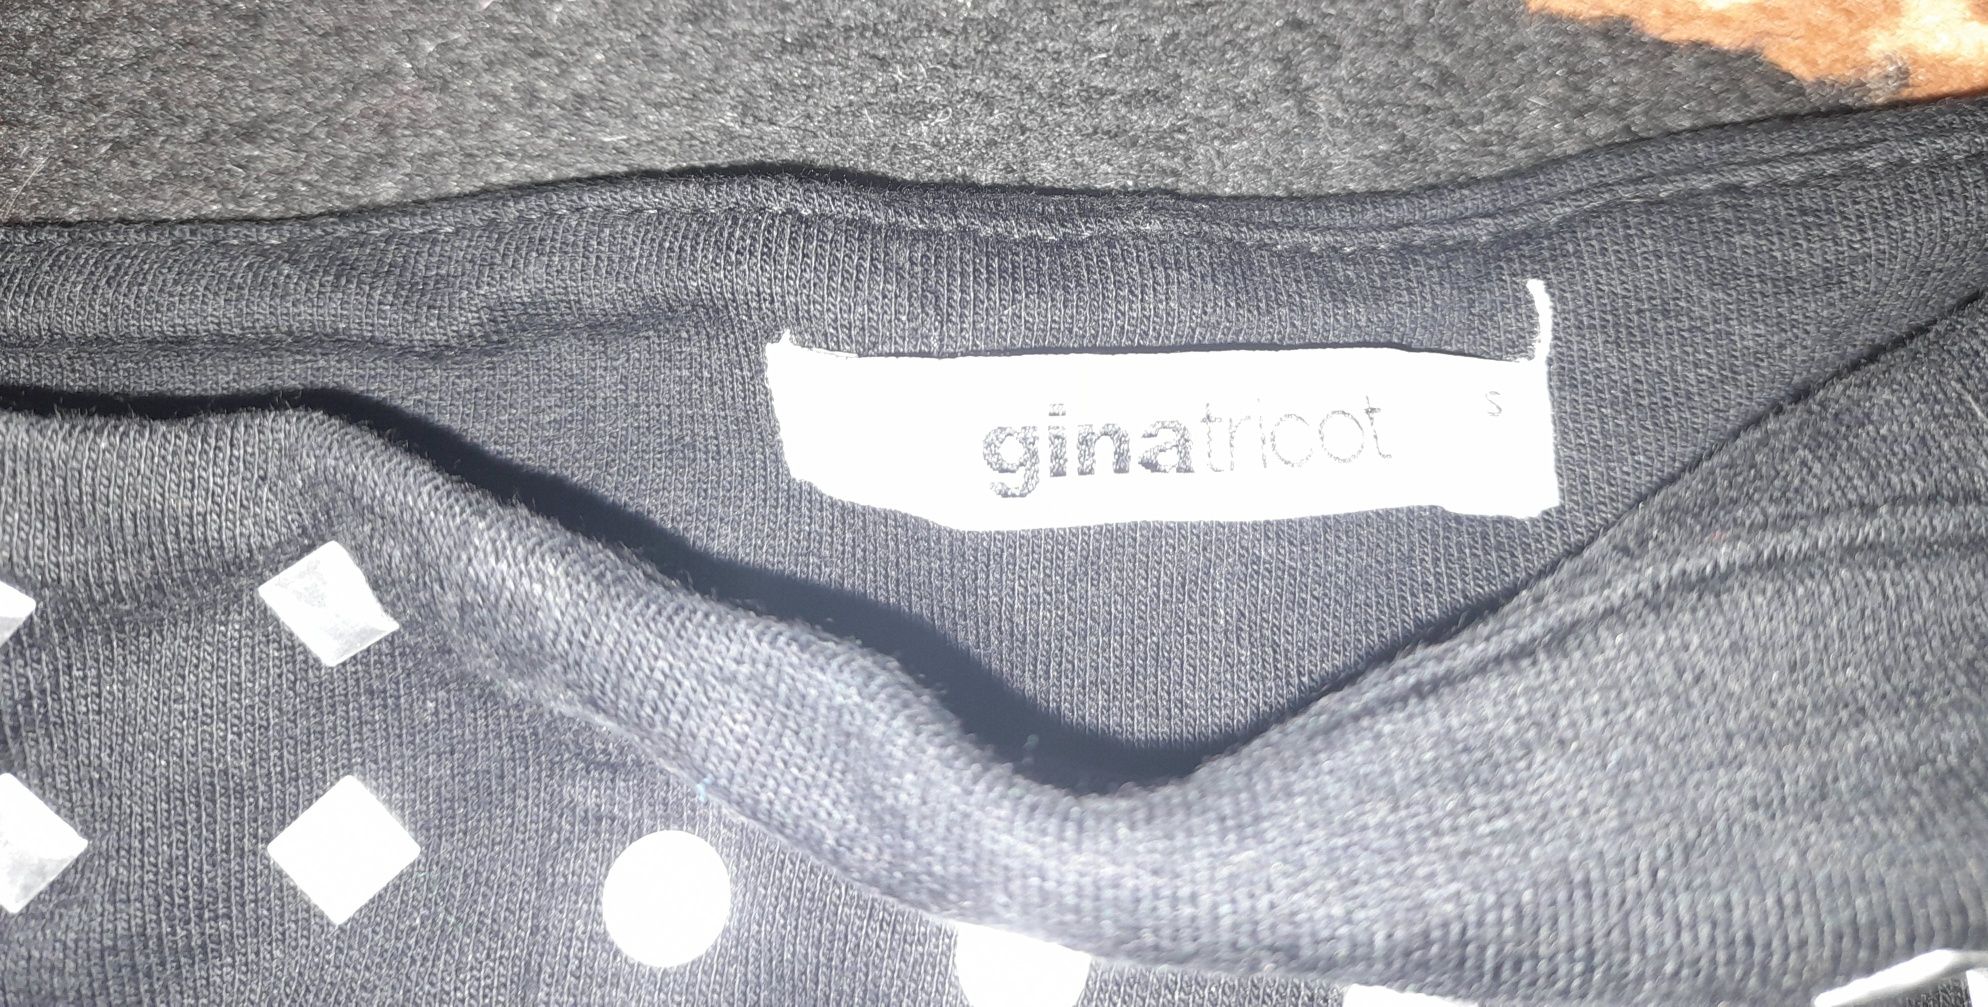 Spódnica plisowana Esmara 36 (S) lub spódnica mini Gina Tricot 36 (S)